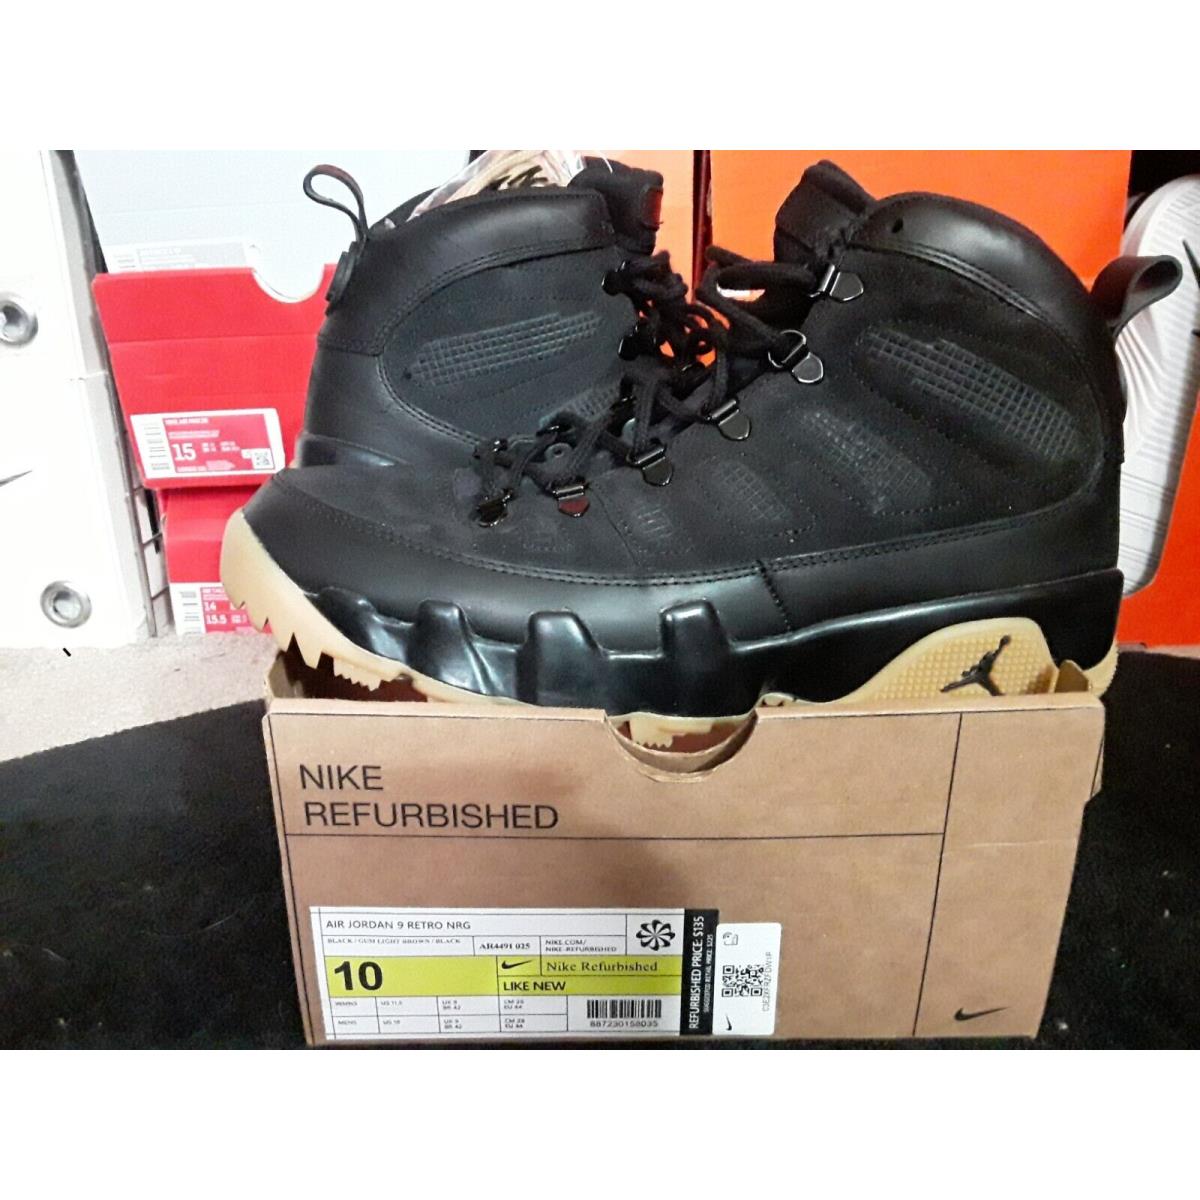 Nike Air Jordan IX 9 Retro Nrg Sneaker Boots Black Gum Light Brown xi AR4491 025